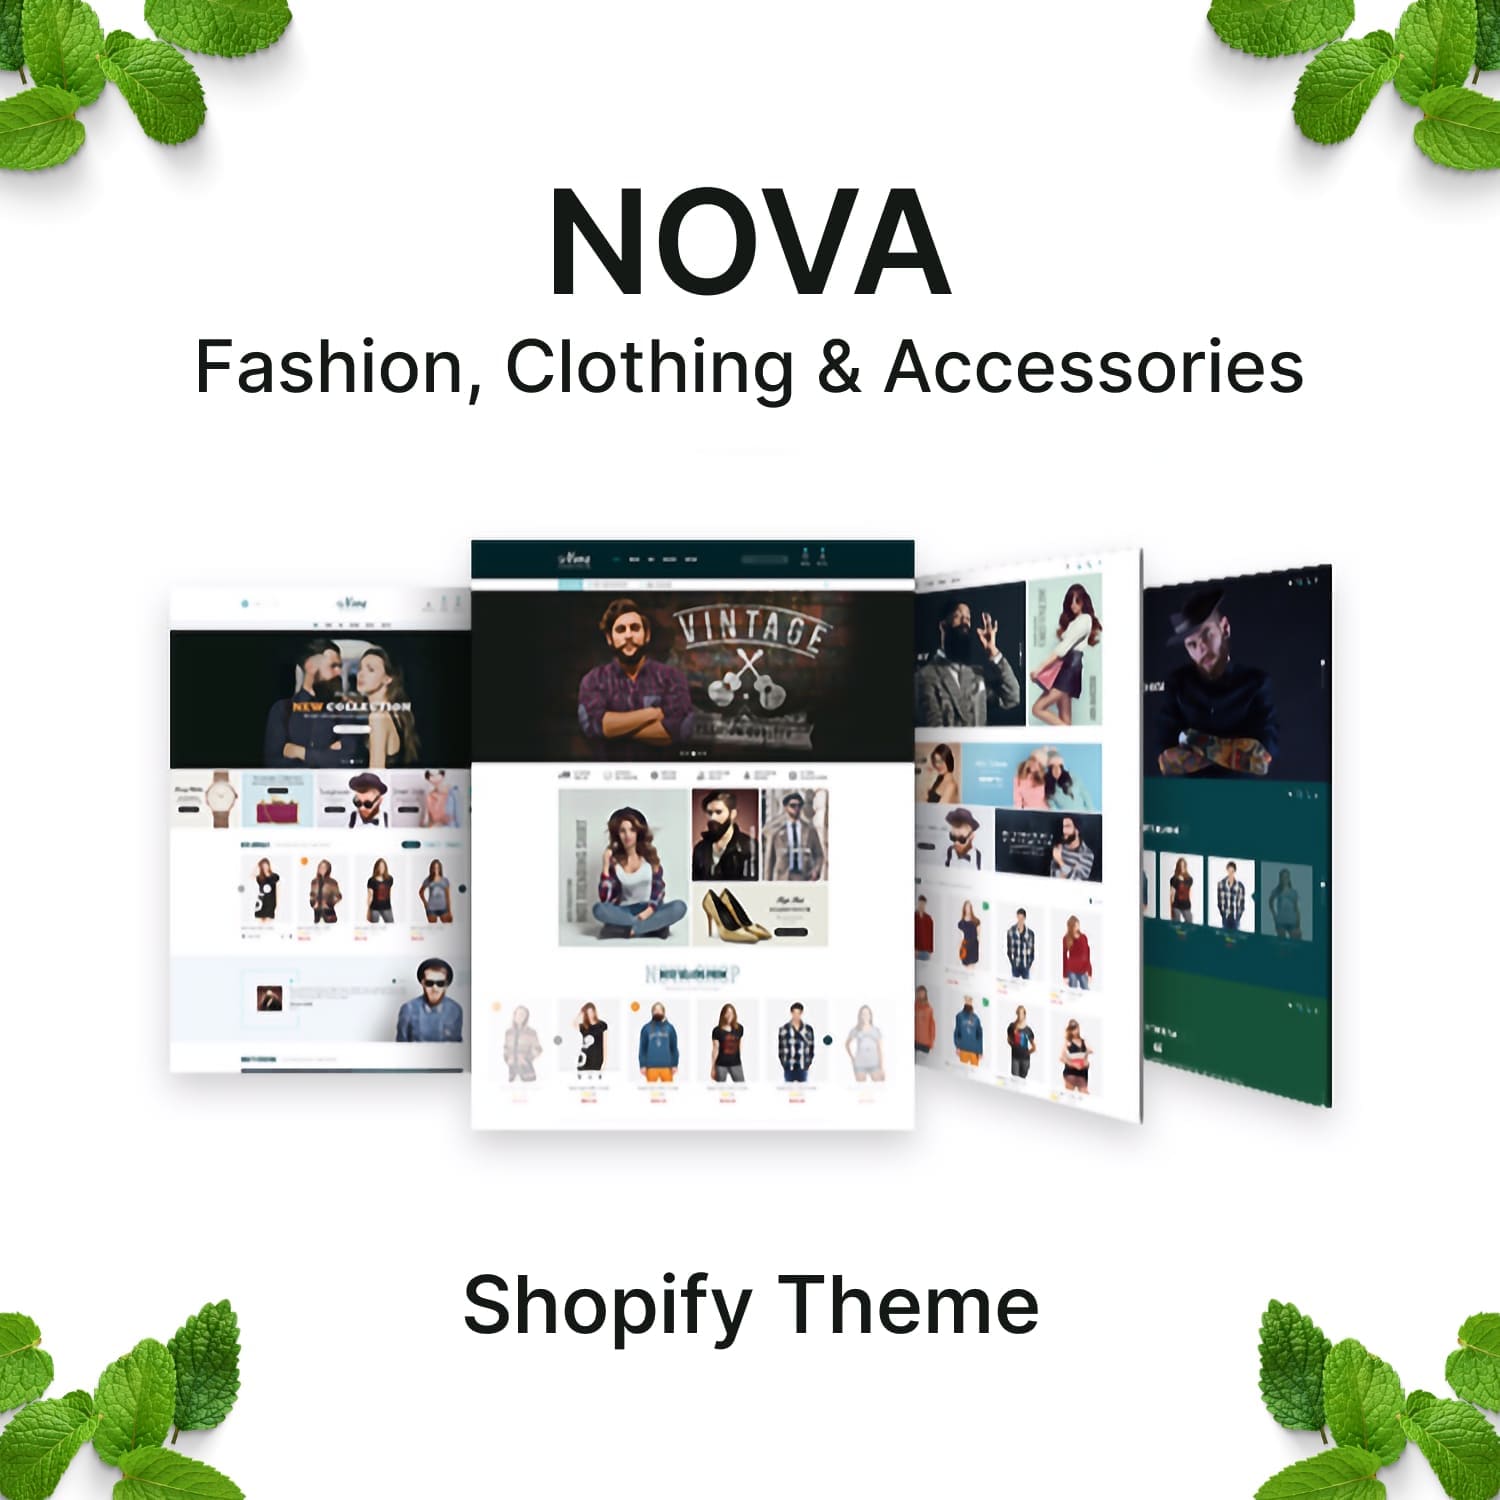 Nova fashion, clothing and accessories shopify theme.